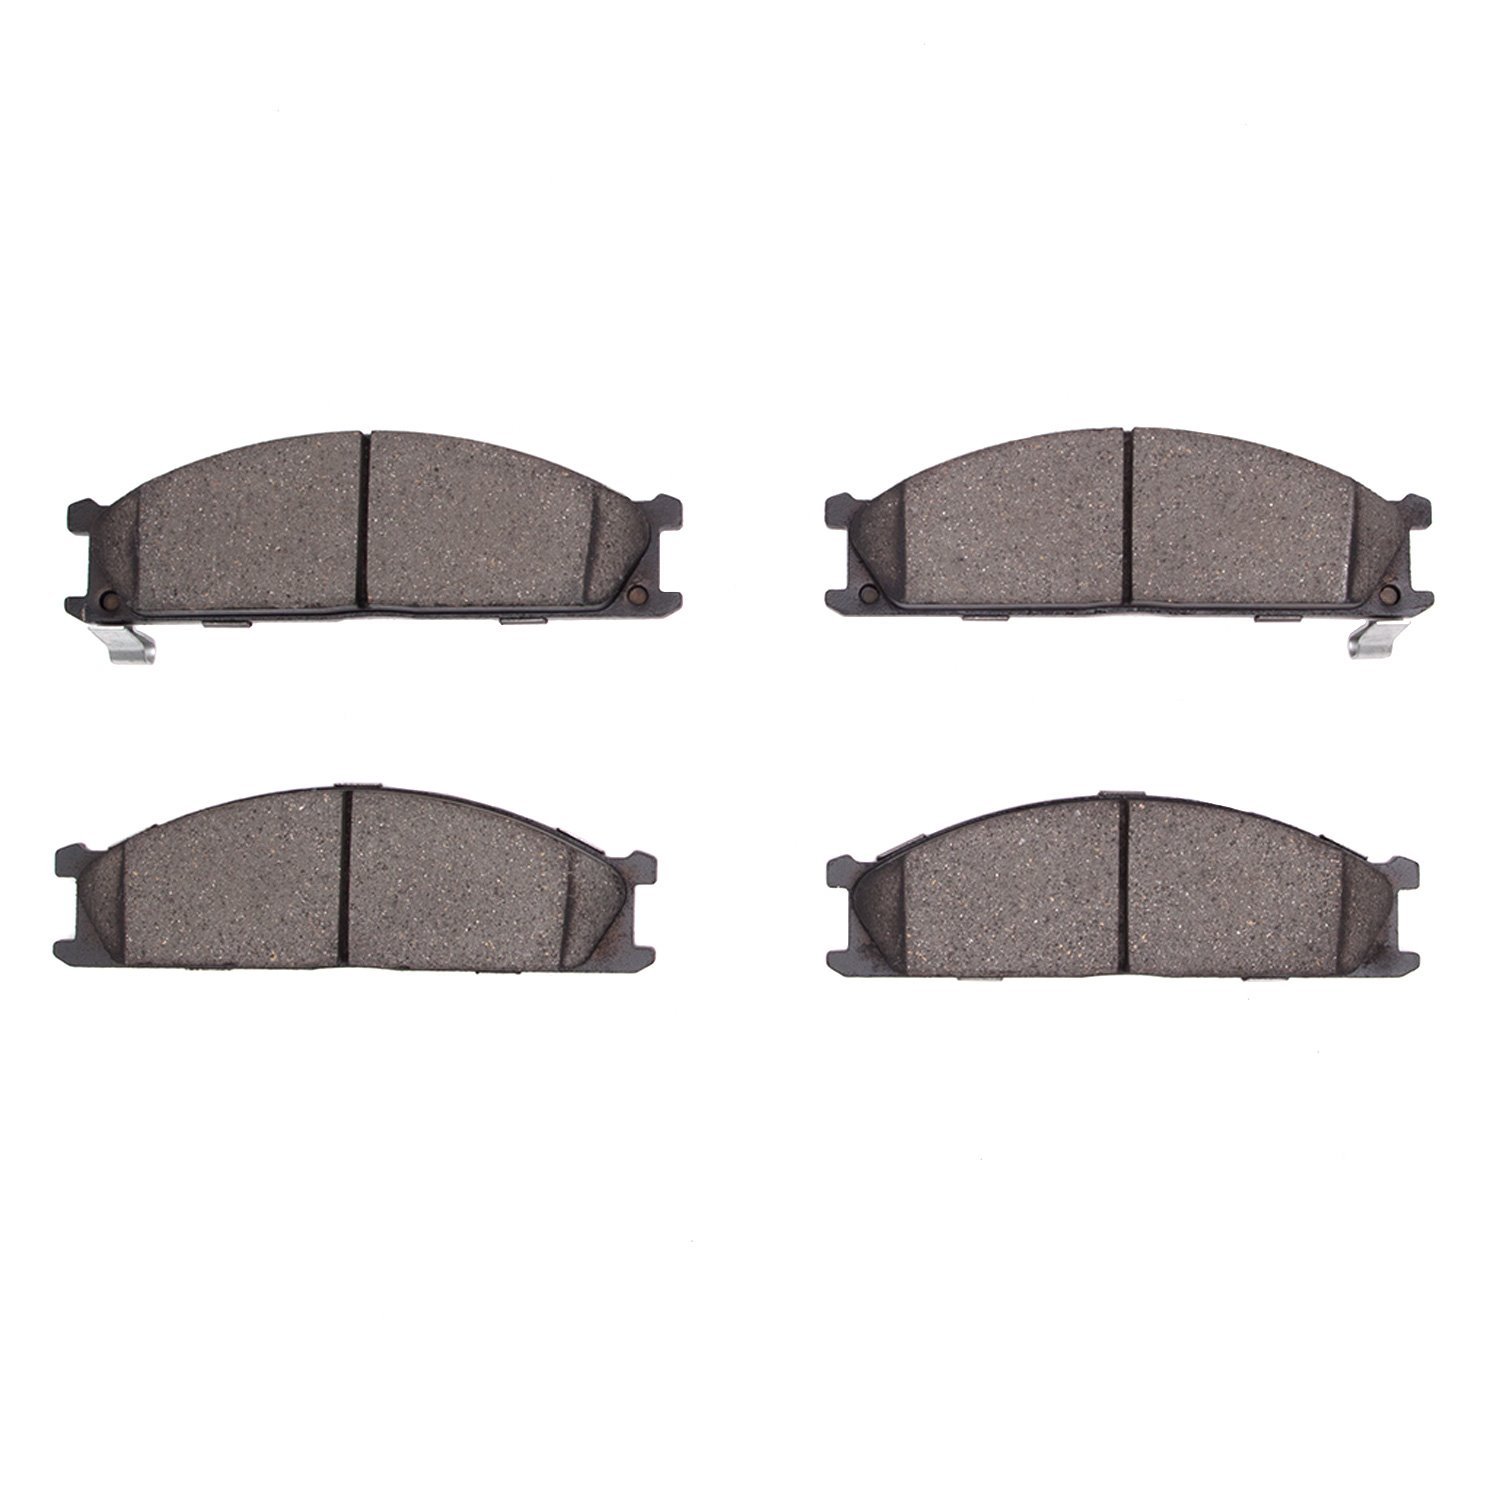 Semi-Metallic Brake Pads, 1985-2015 Fits Multiple Makes/Models, Position: Front